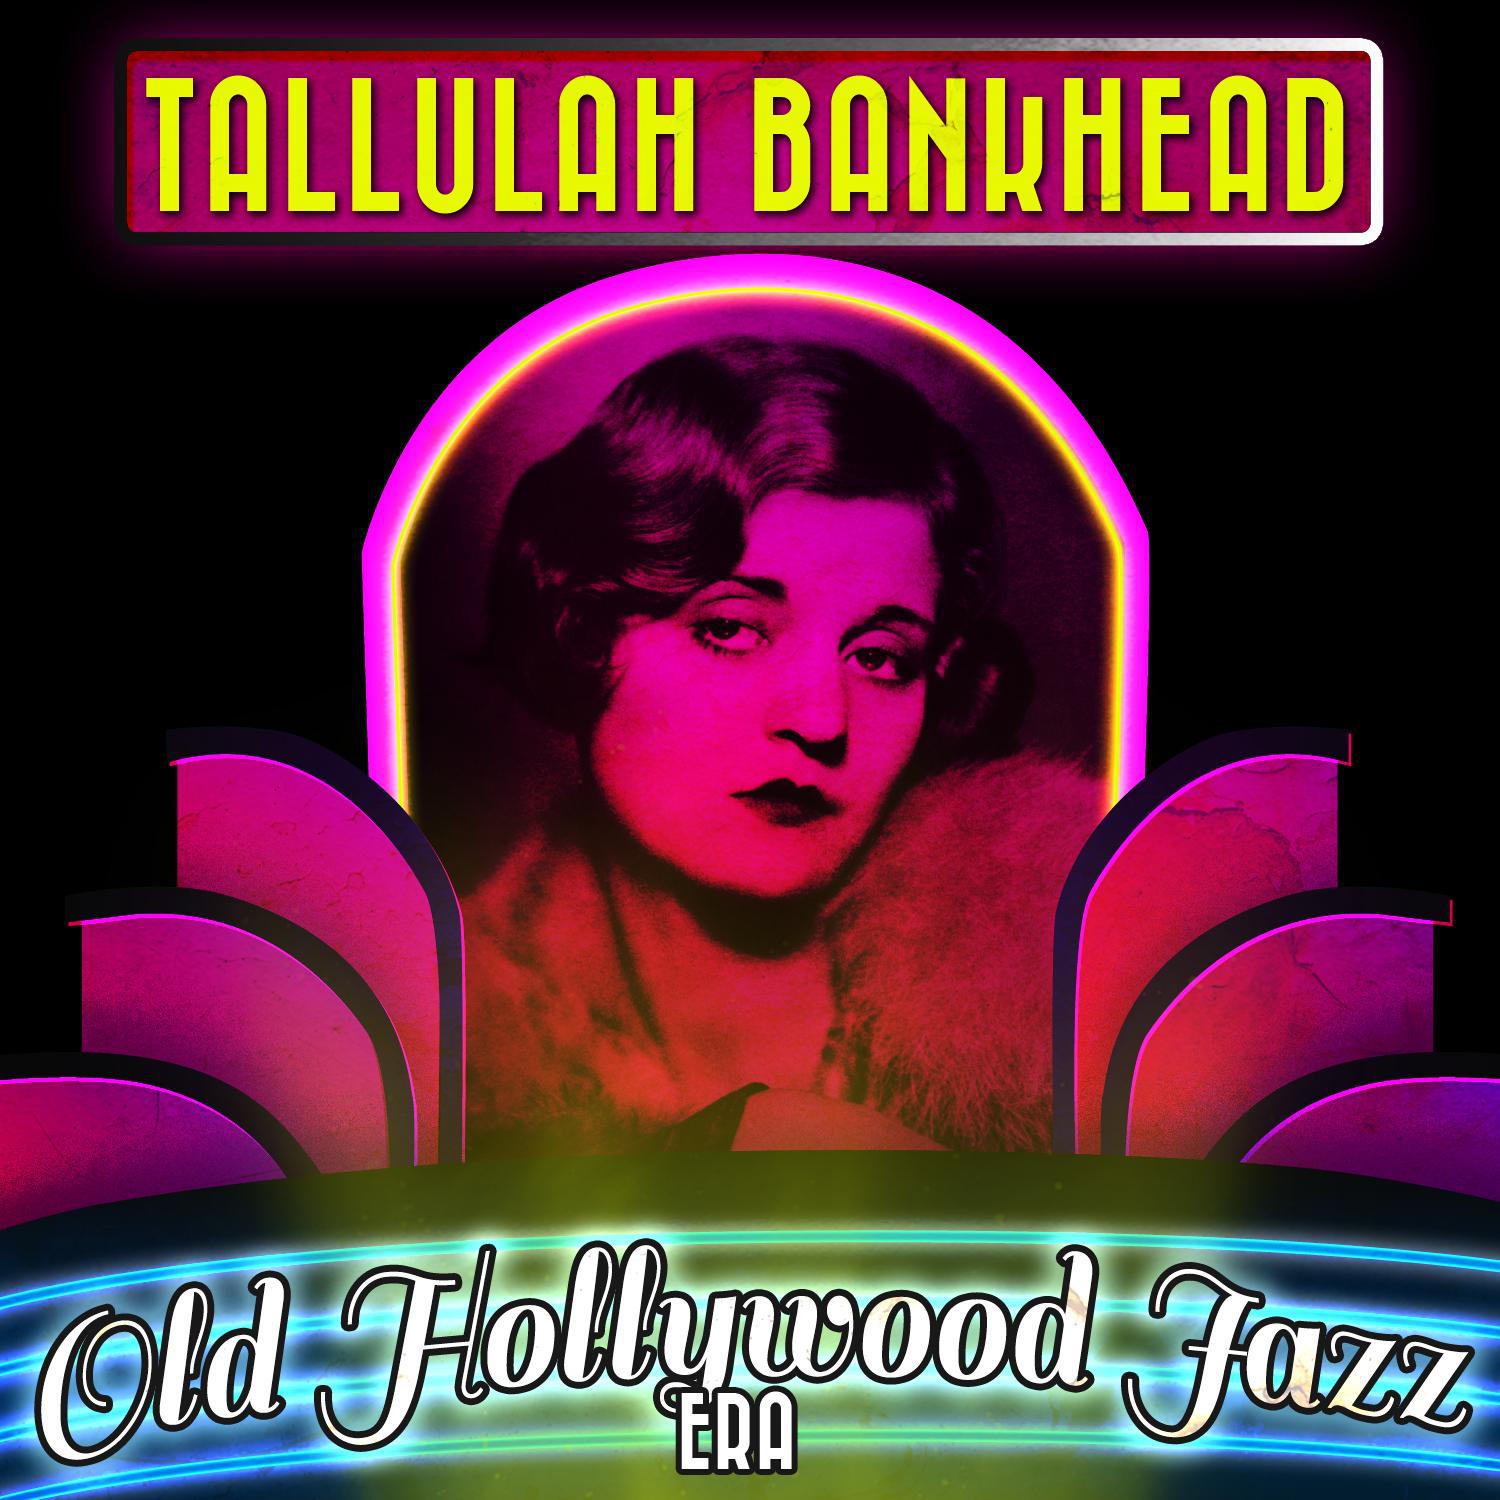 Tallulah Bankhead - The Big Show, Pt. 3